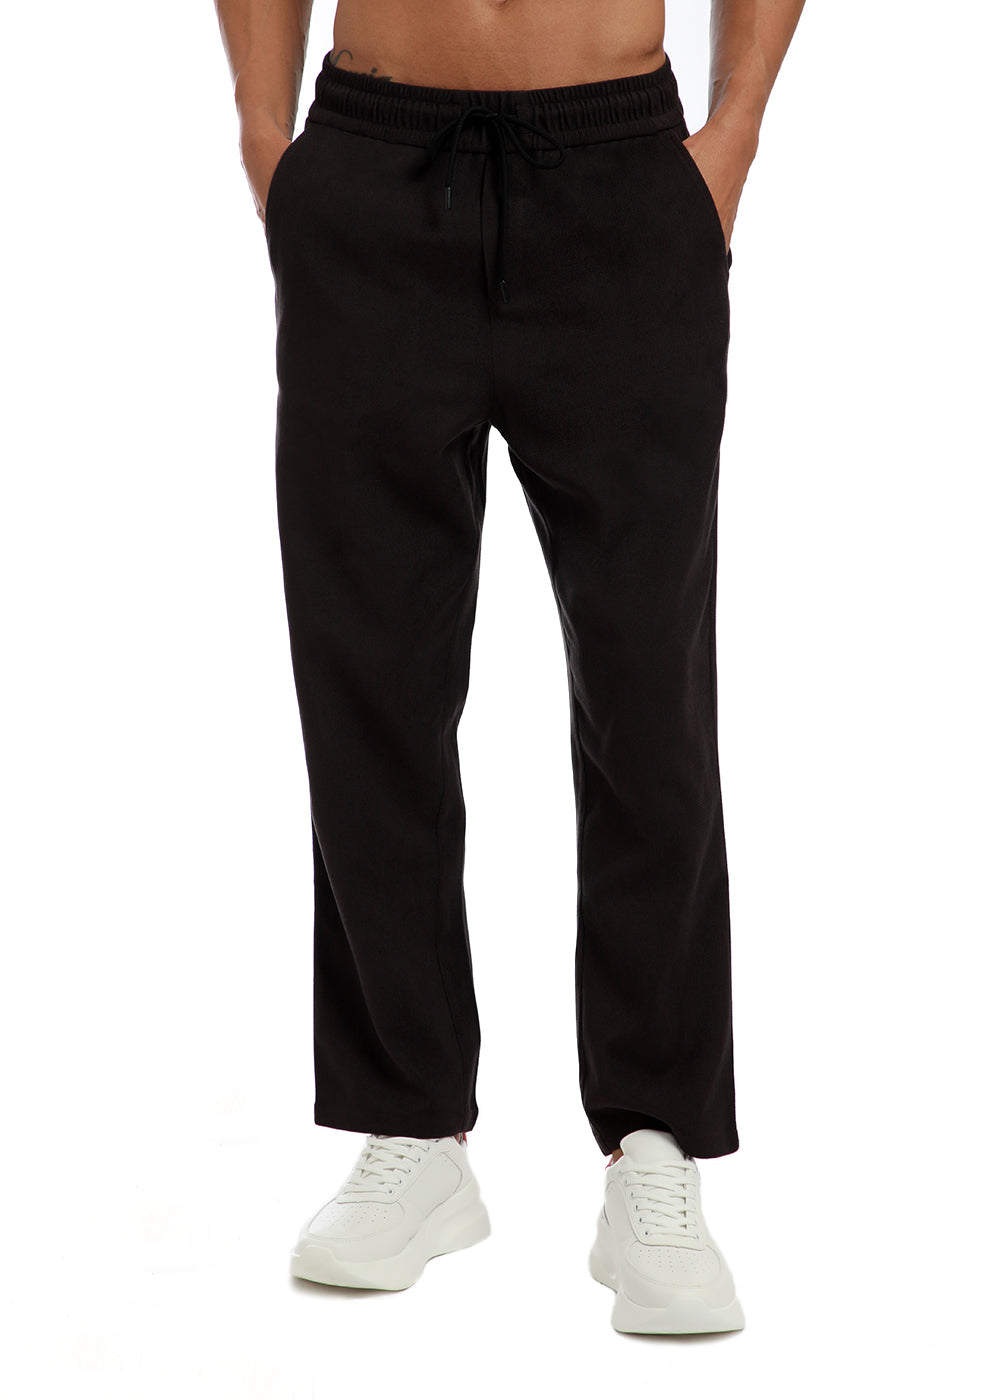 corduroy pants Gunnald brown (without belt) | Jeans | Pants | Men | THOR  STEINAR® Onlineshop